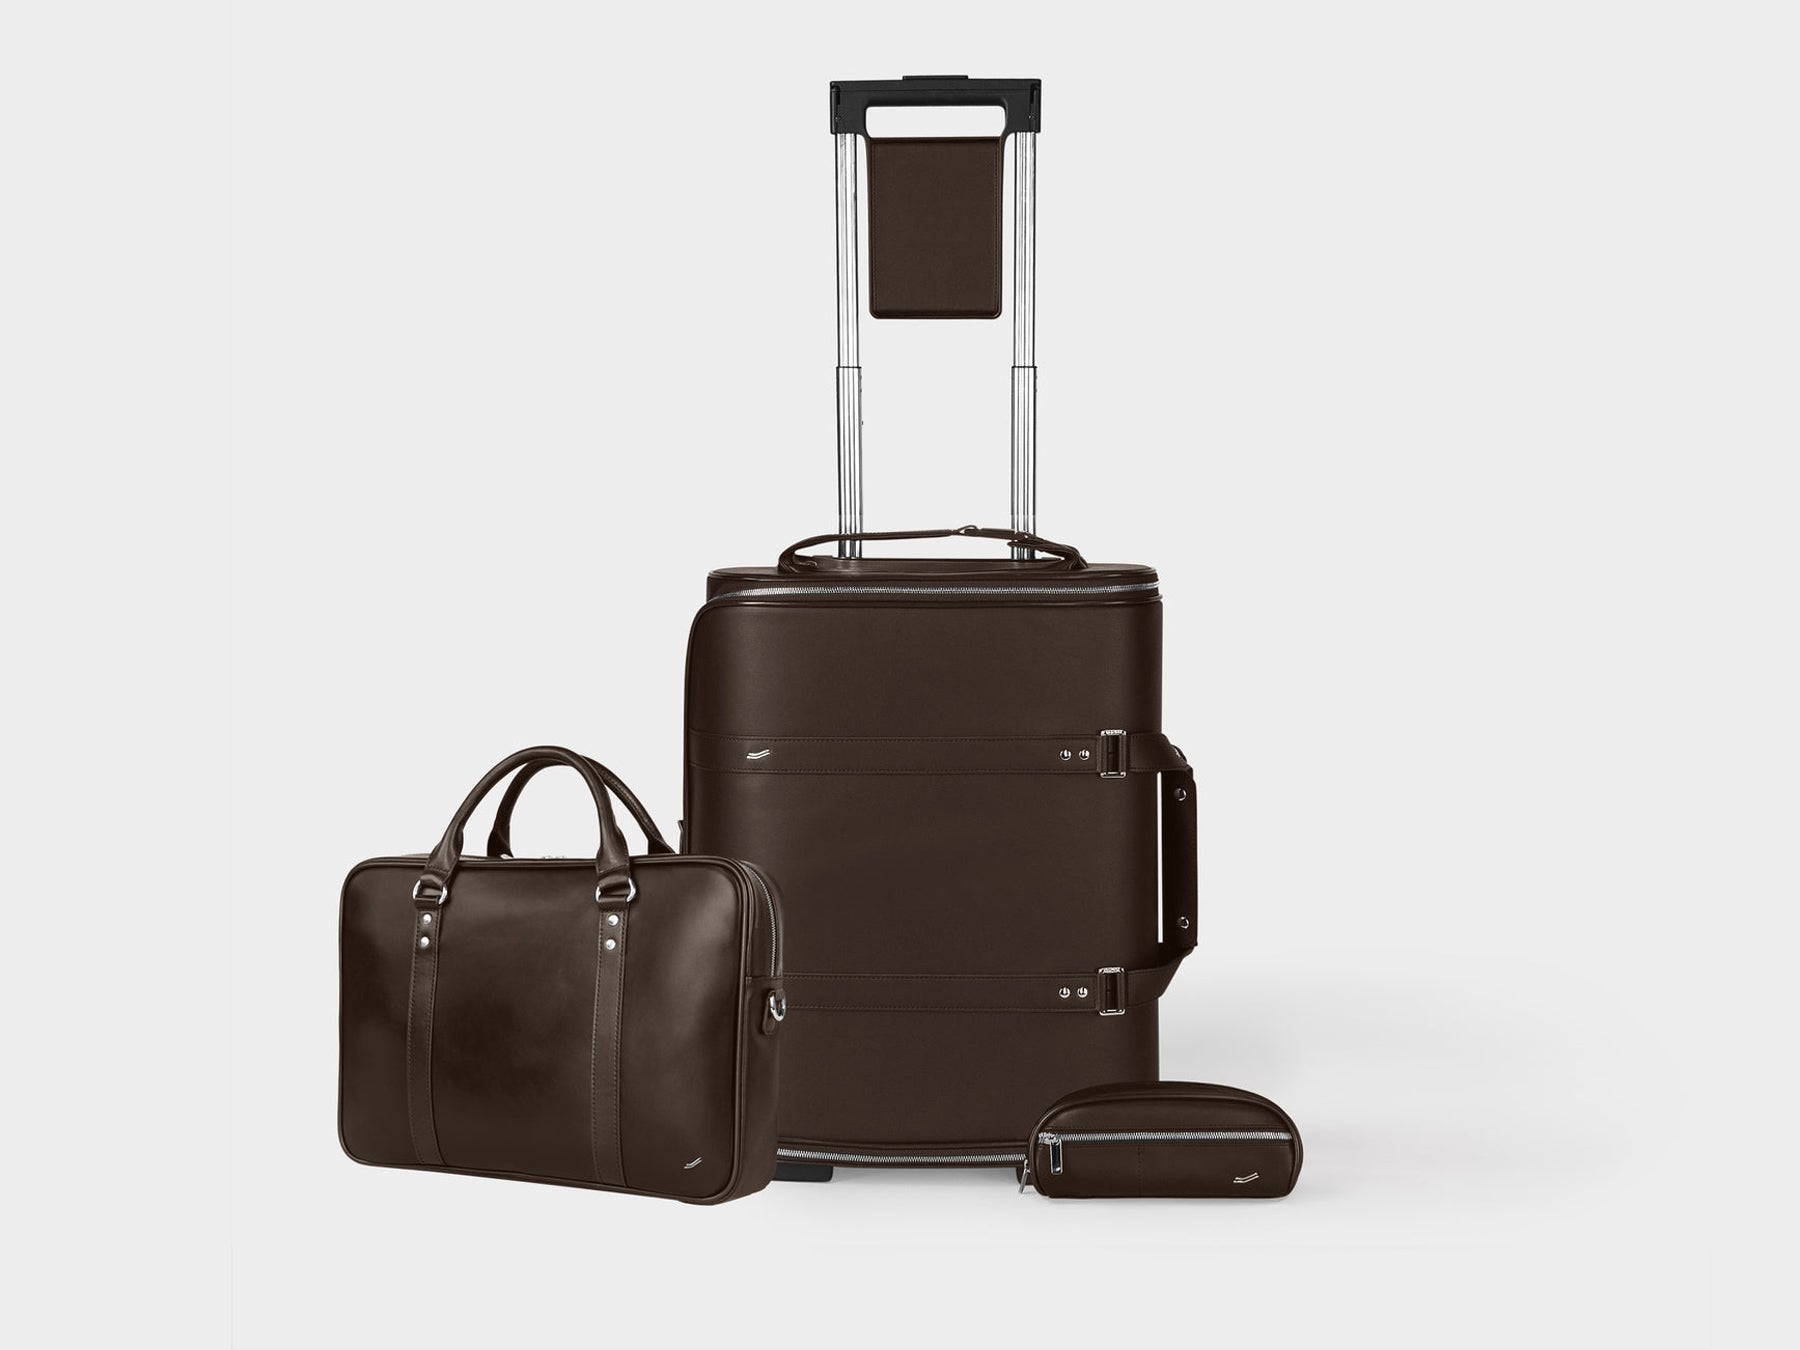 F38 Business Luggage Set | VOCIER Carry-on luggage